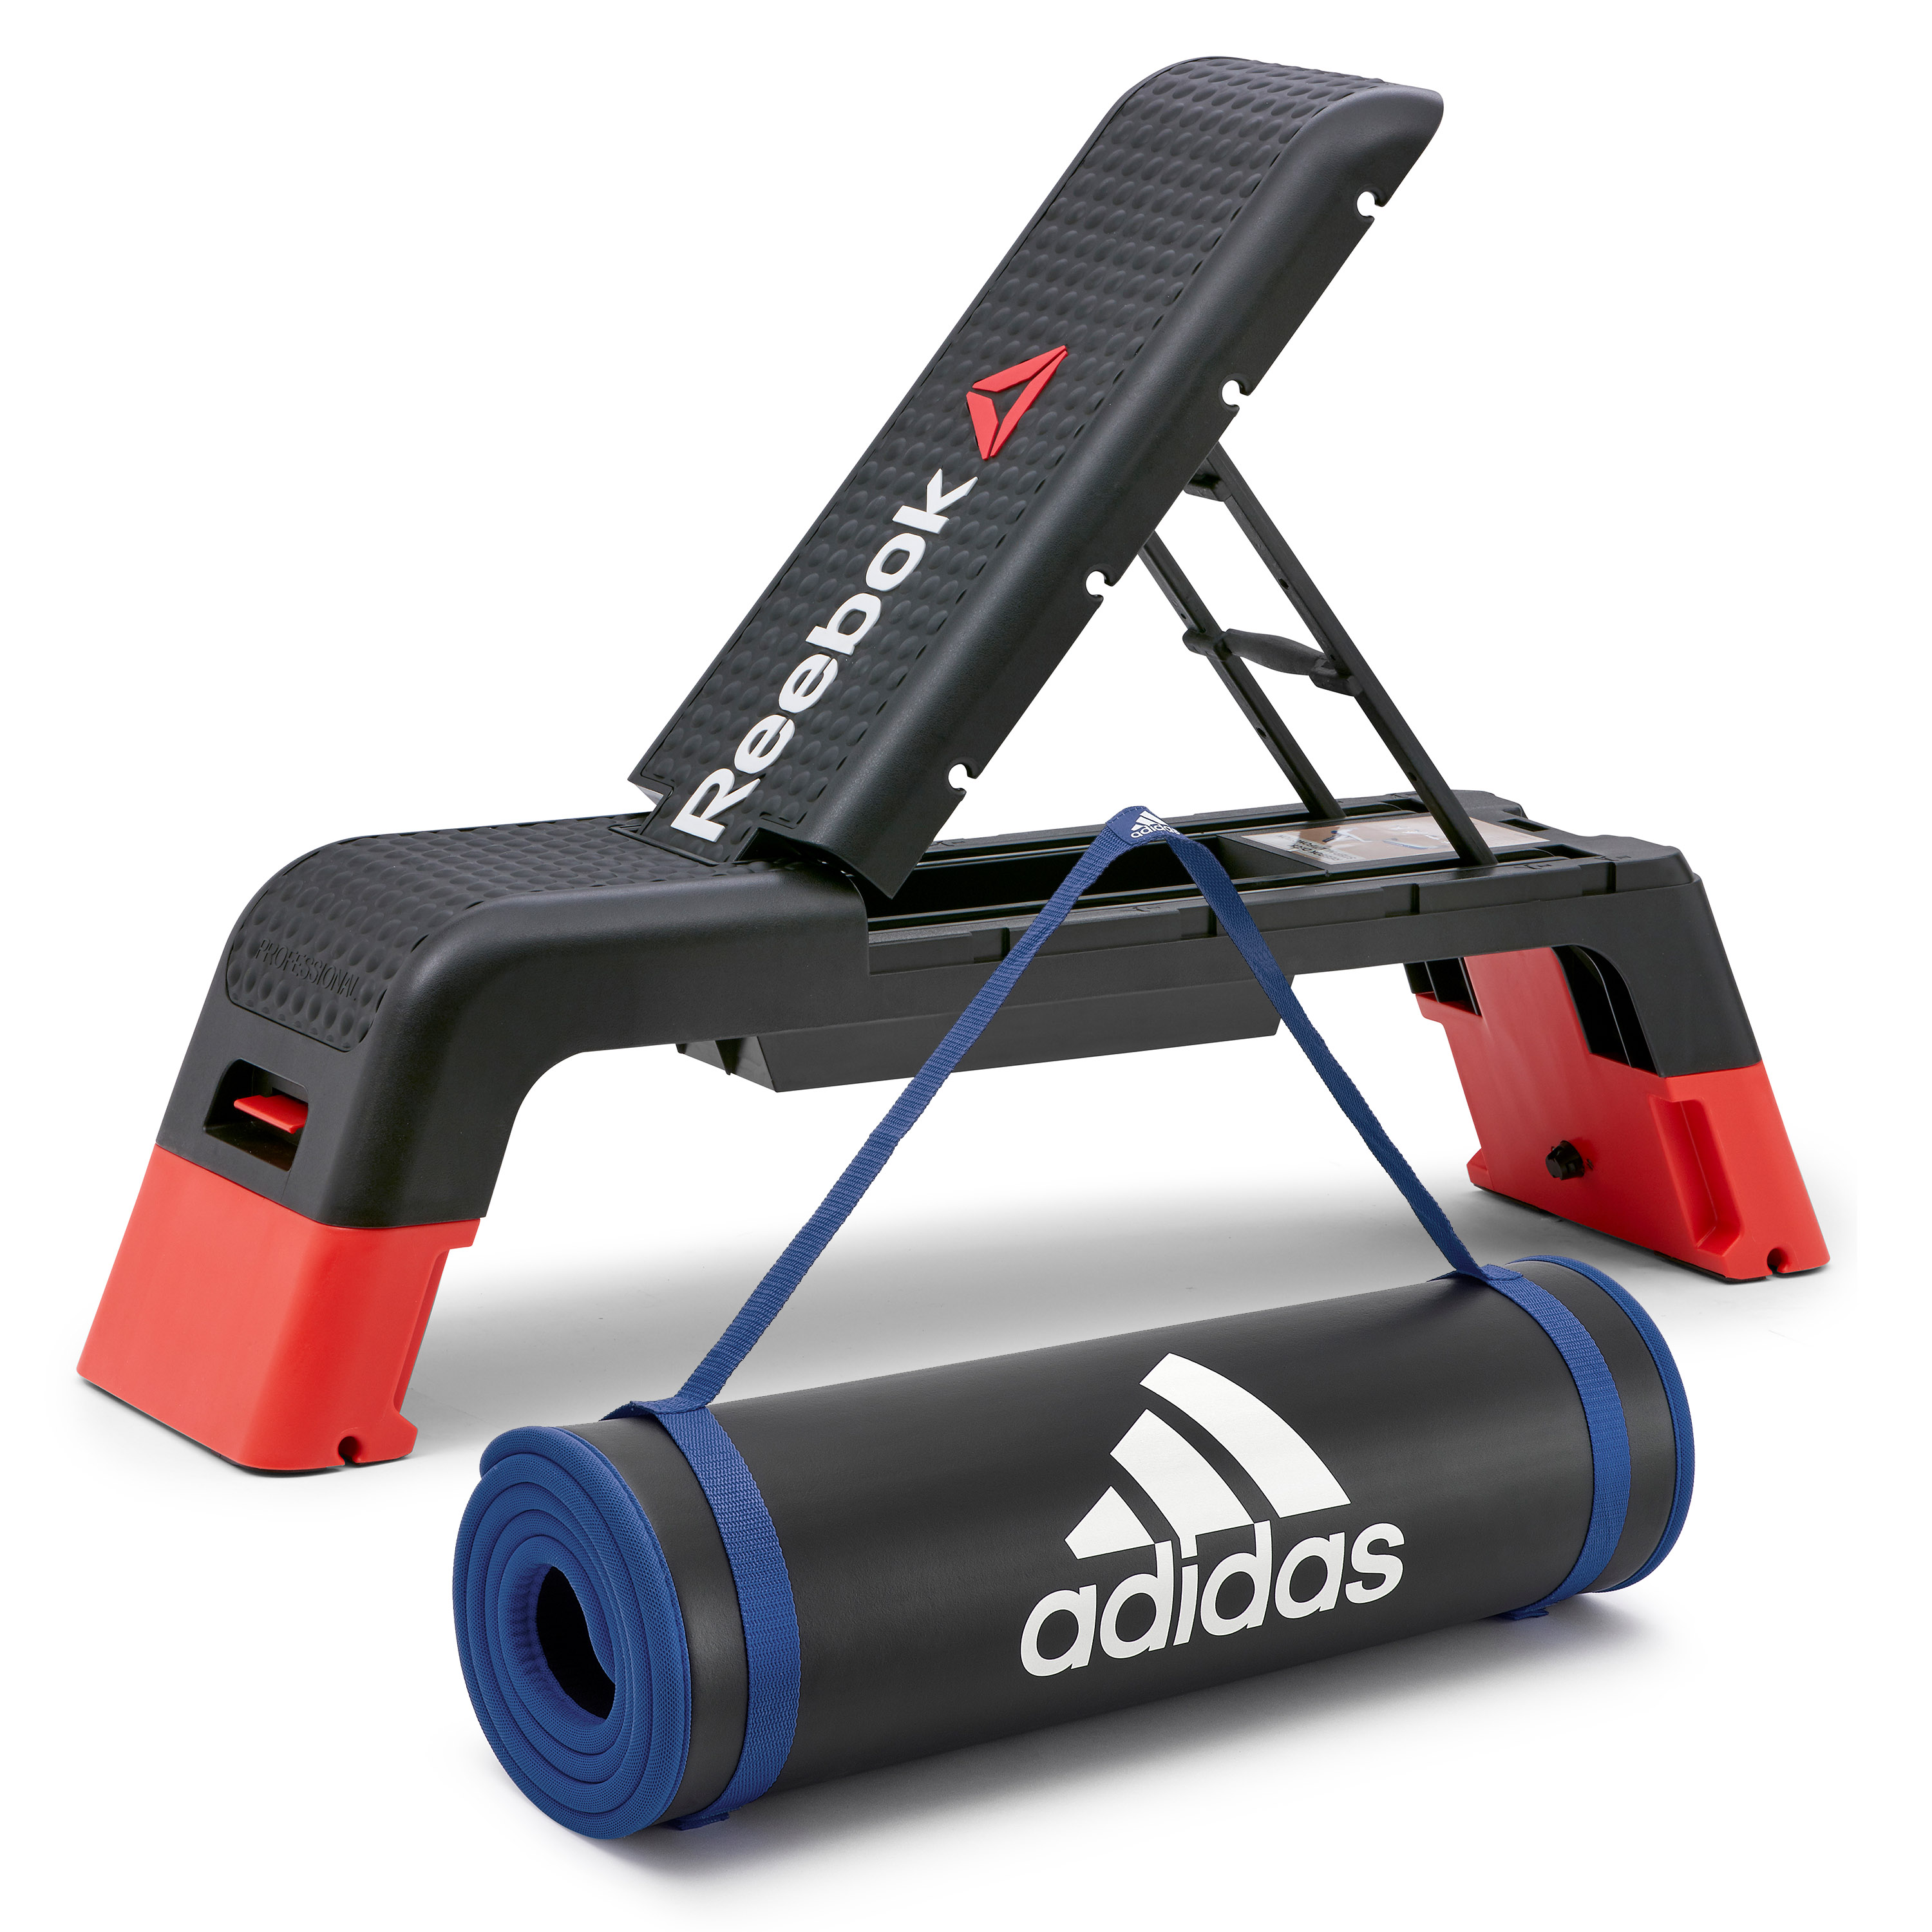 adidas workout equipment